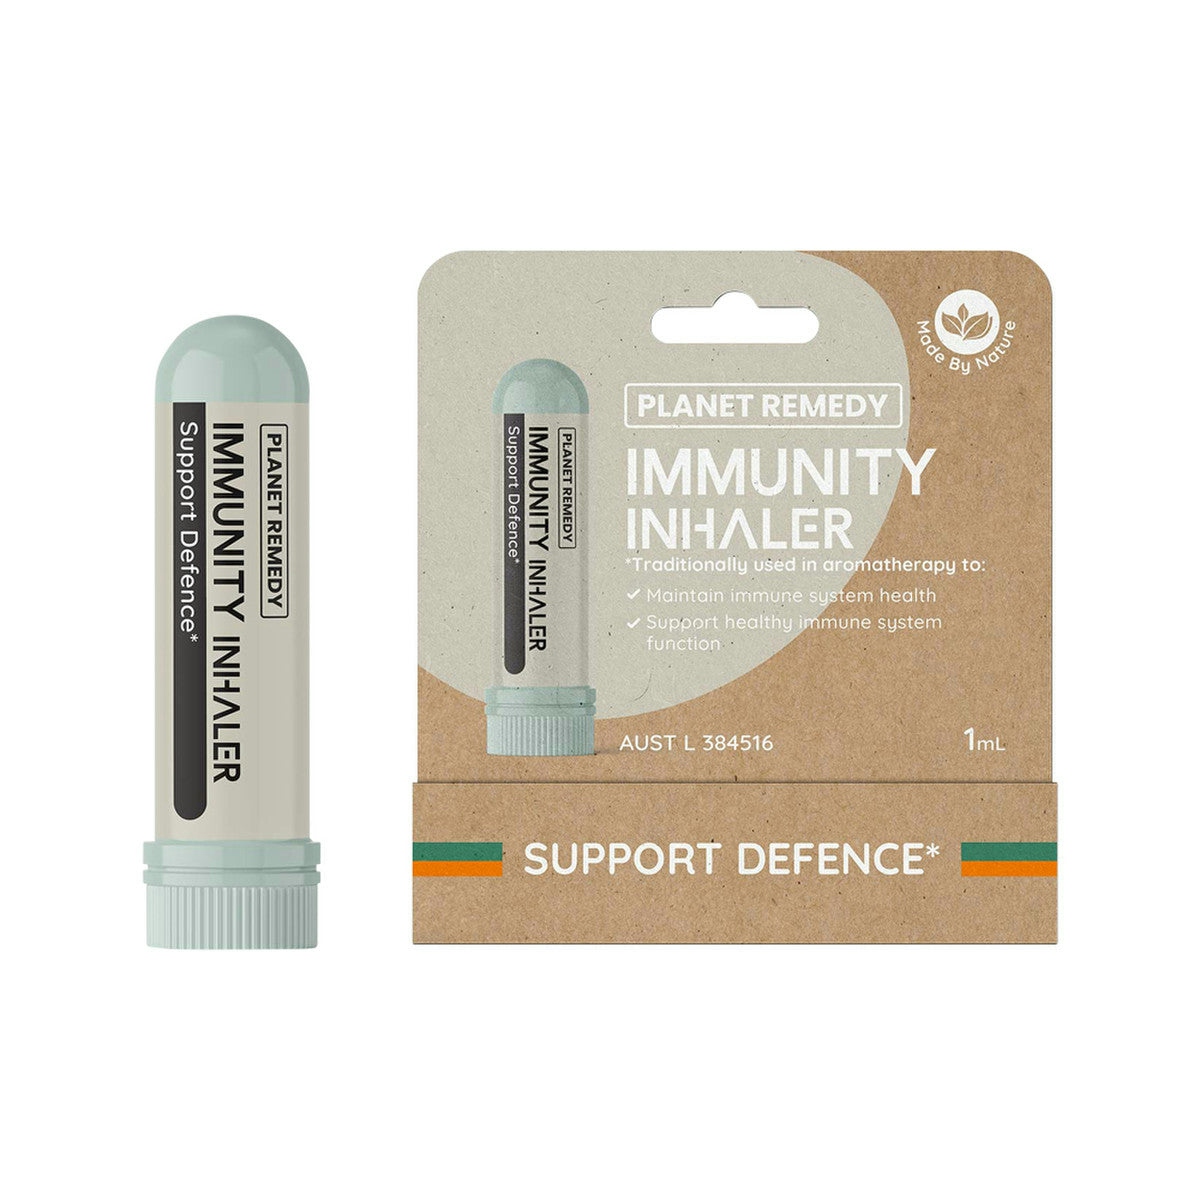 image of Planet Remedy Immunity Inhaler 1ml on white background